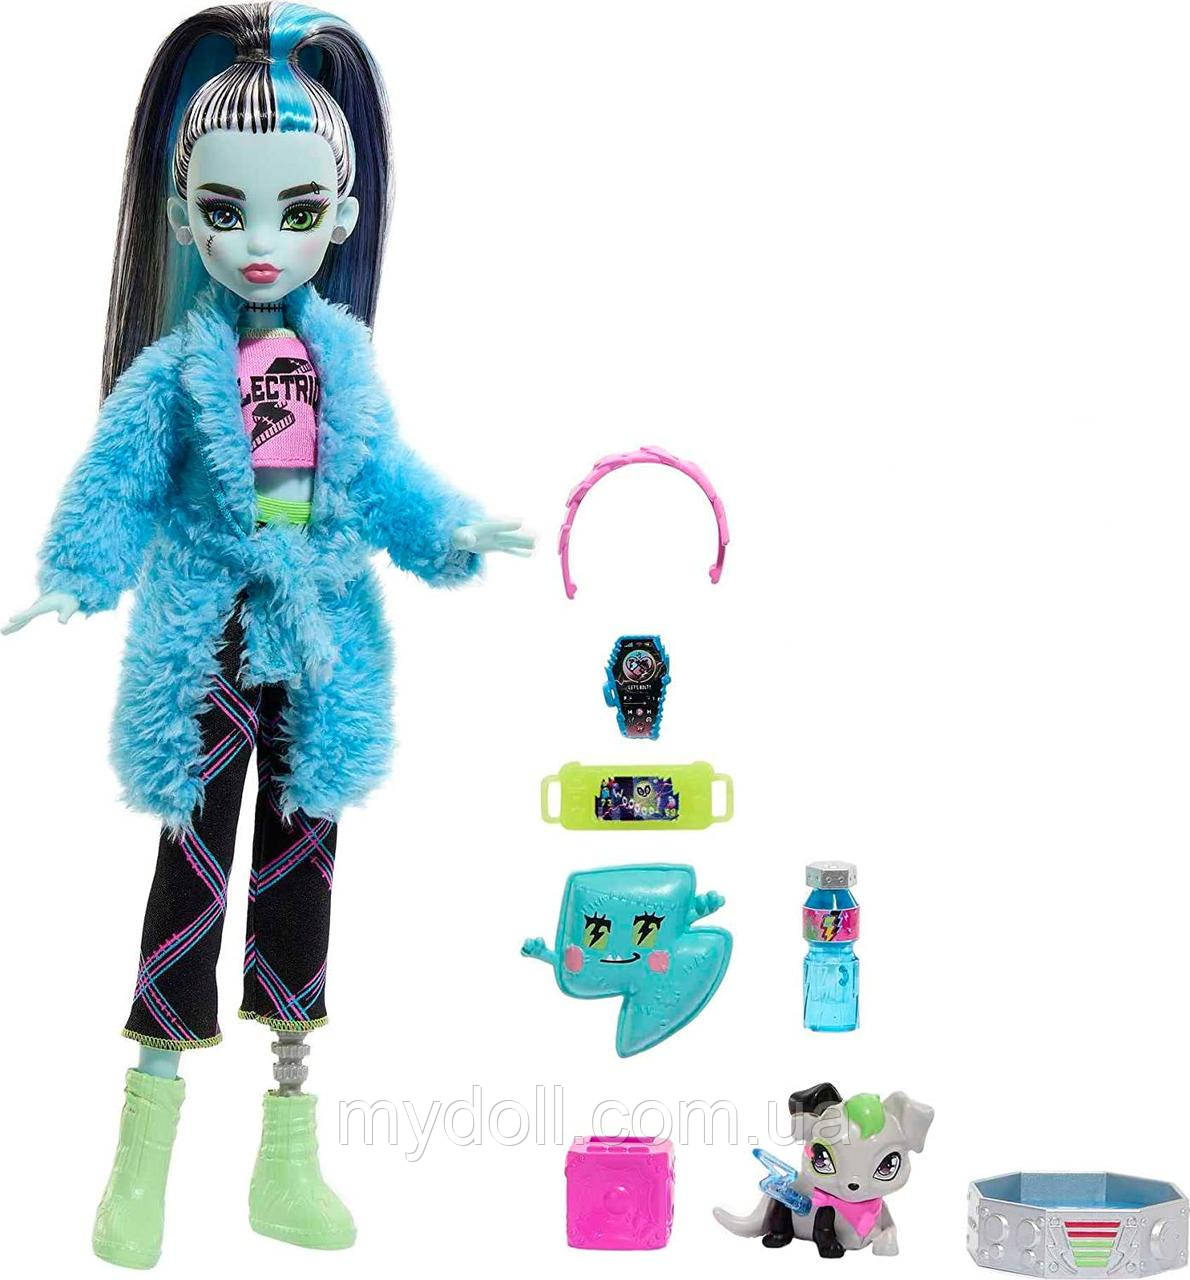 Лялька Монстер Хай Френкі Штейн Monster High Frankie Stein Doll Піжамна вечірка Creepover Party HKY68 Оригінал